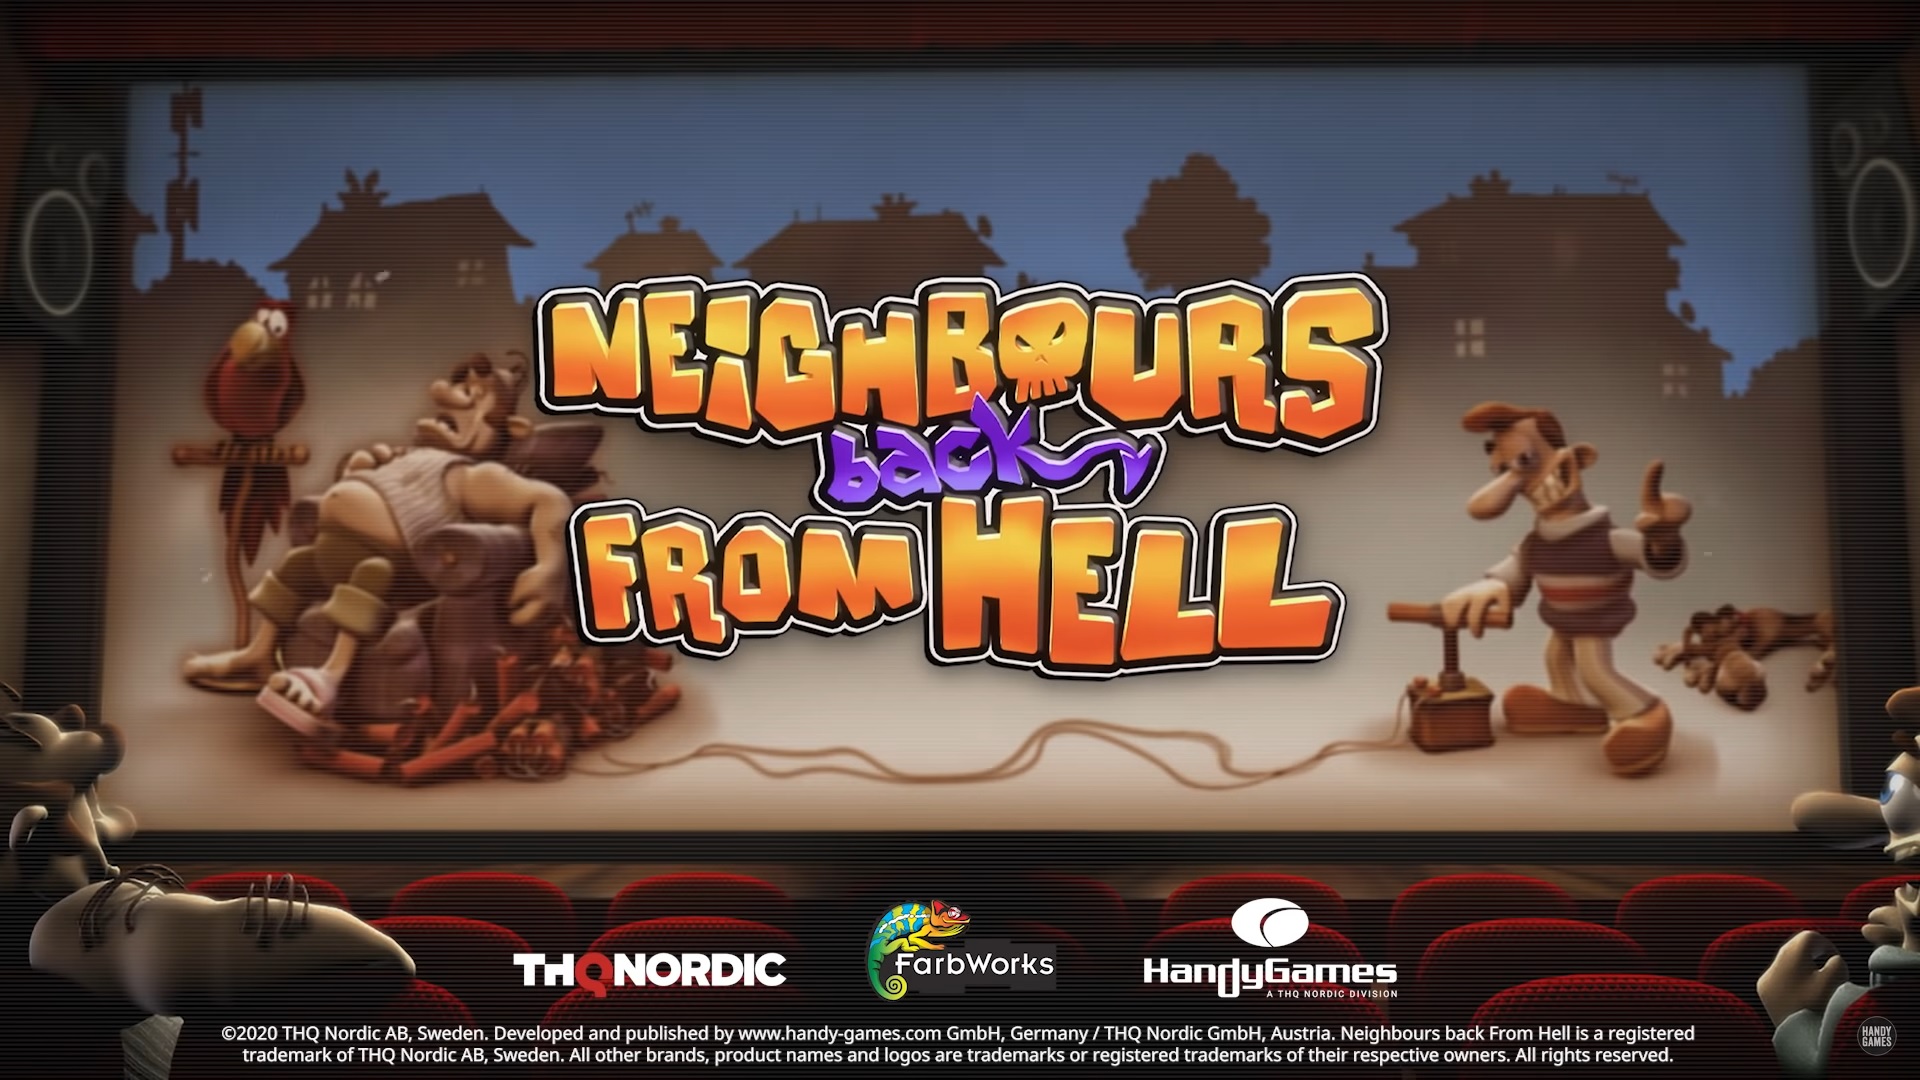 Как достать соседа взломка. Ремастер Neighbours from Hell. Neighbours from Hell ps4. Как достать соседа 2020. Как достать соседа Remastered 2020.